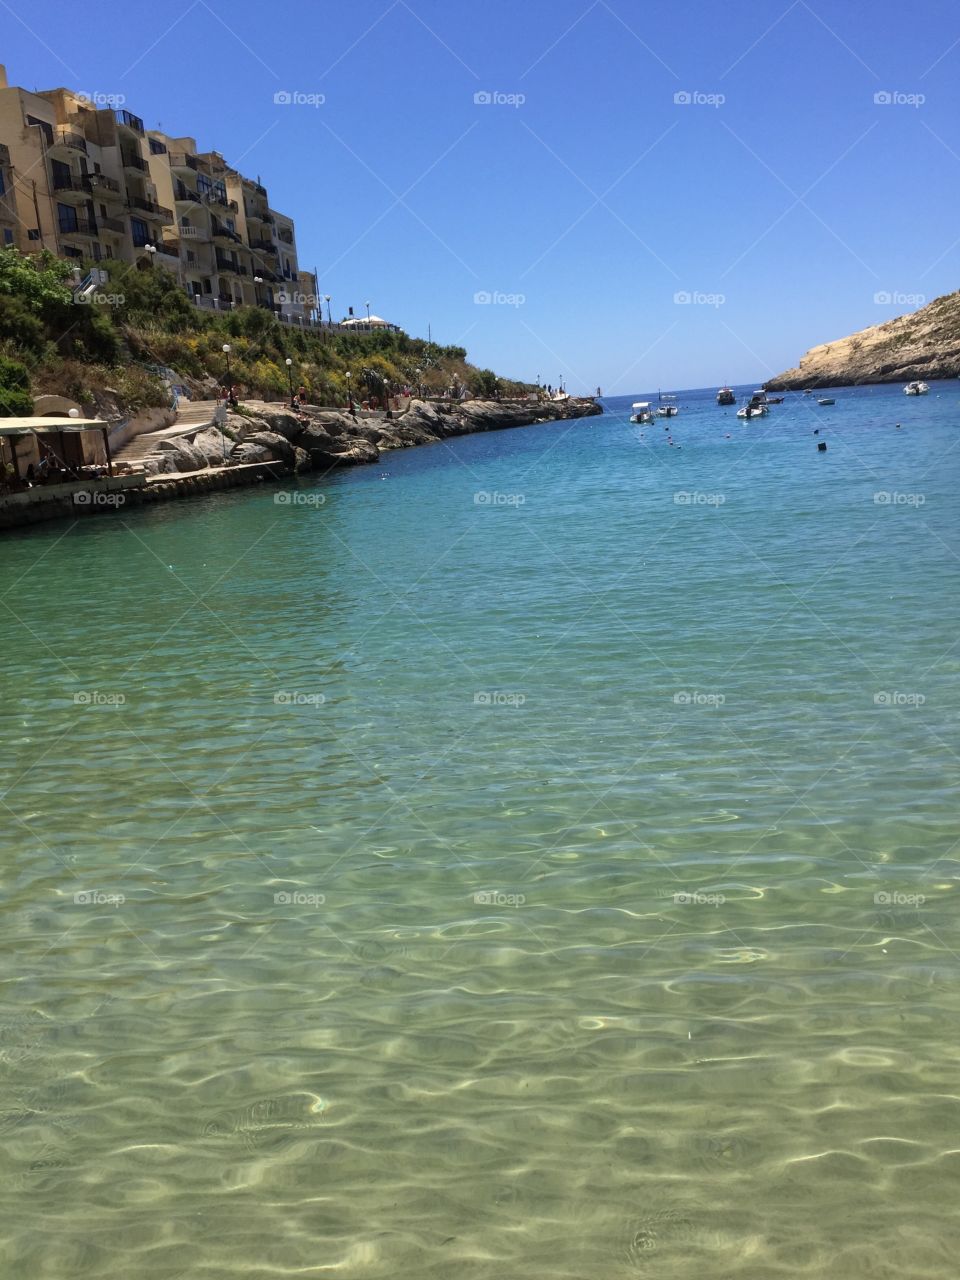 Let the vacation begin  - Xlendi - Gozo